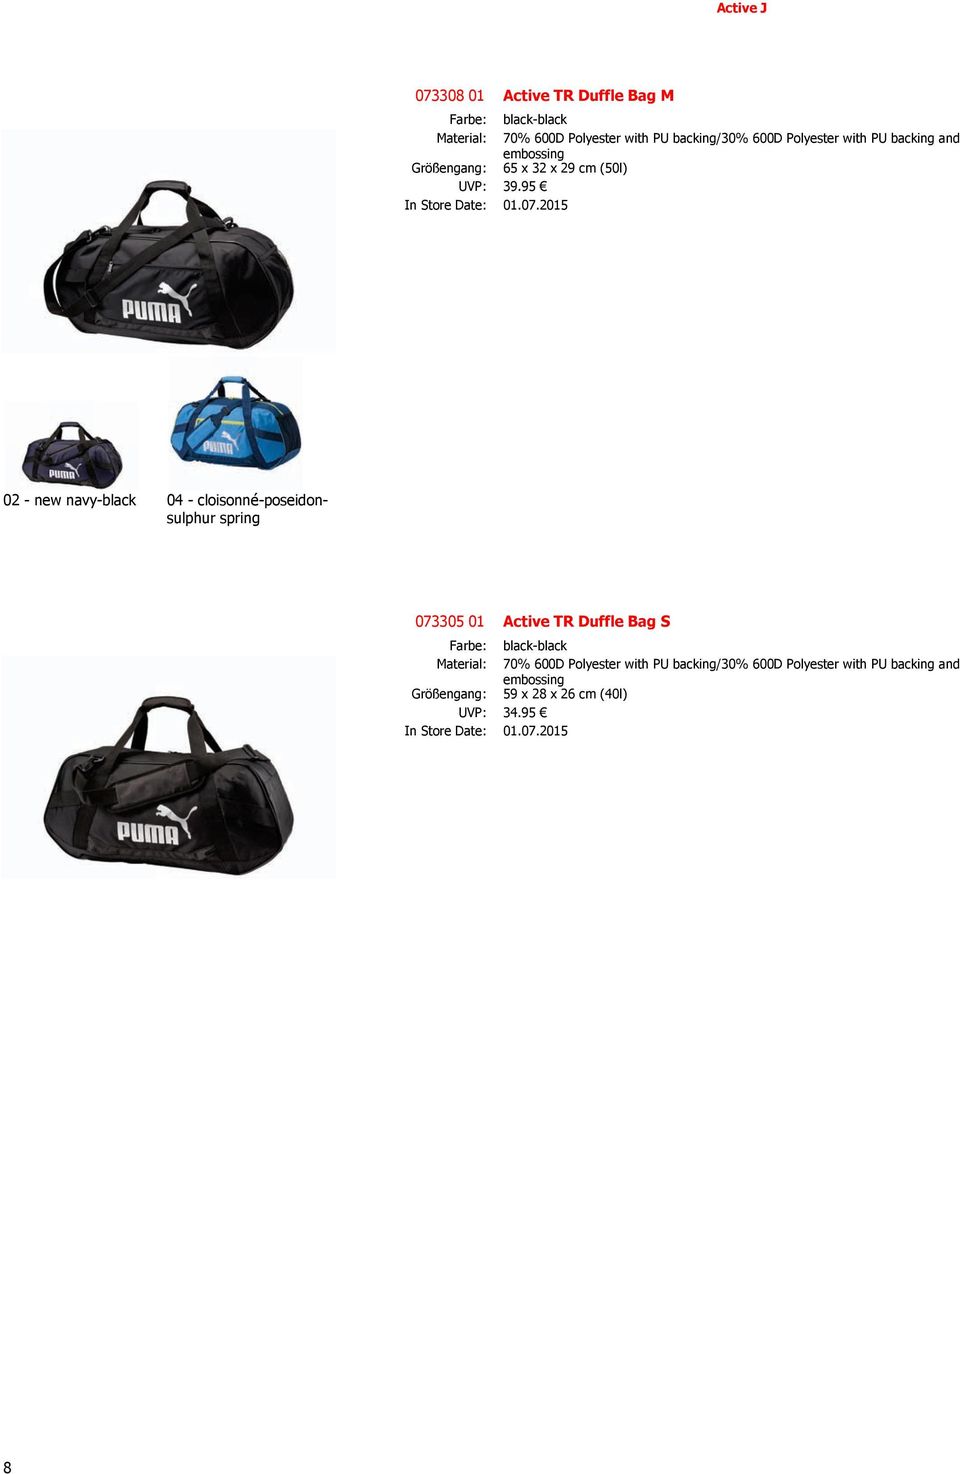 95 02 - new navy-black 04 - cloisonné-poseidonsulphur spring 073305 01 Active TR Duffle Bag S -black